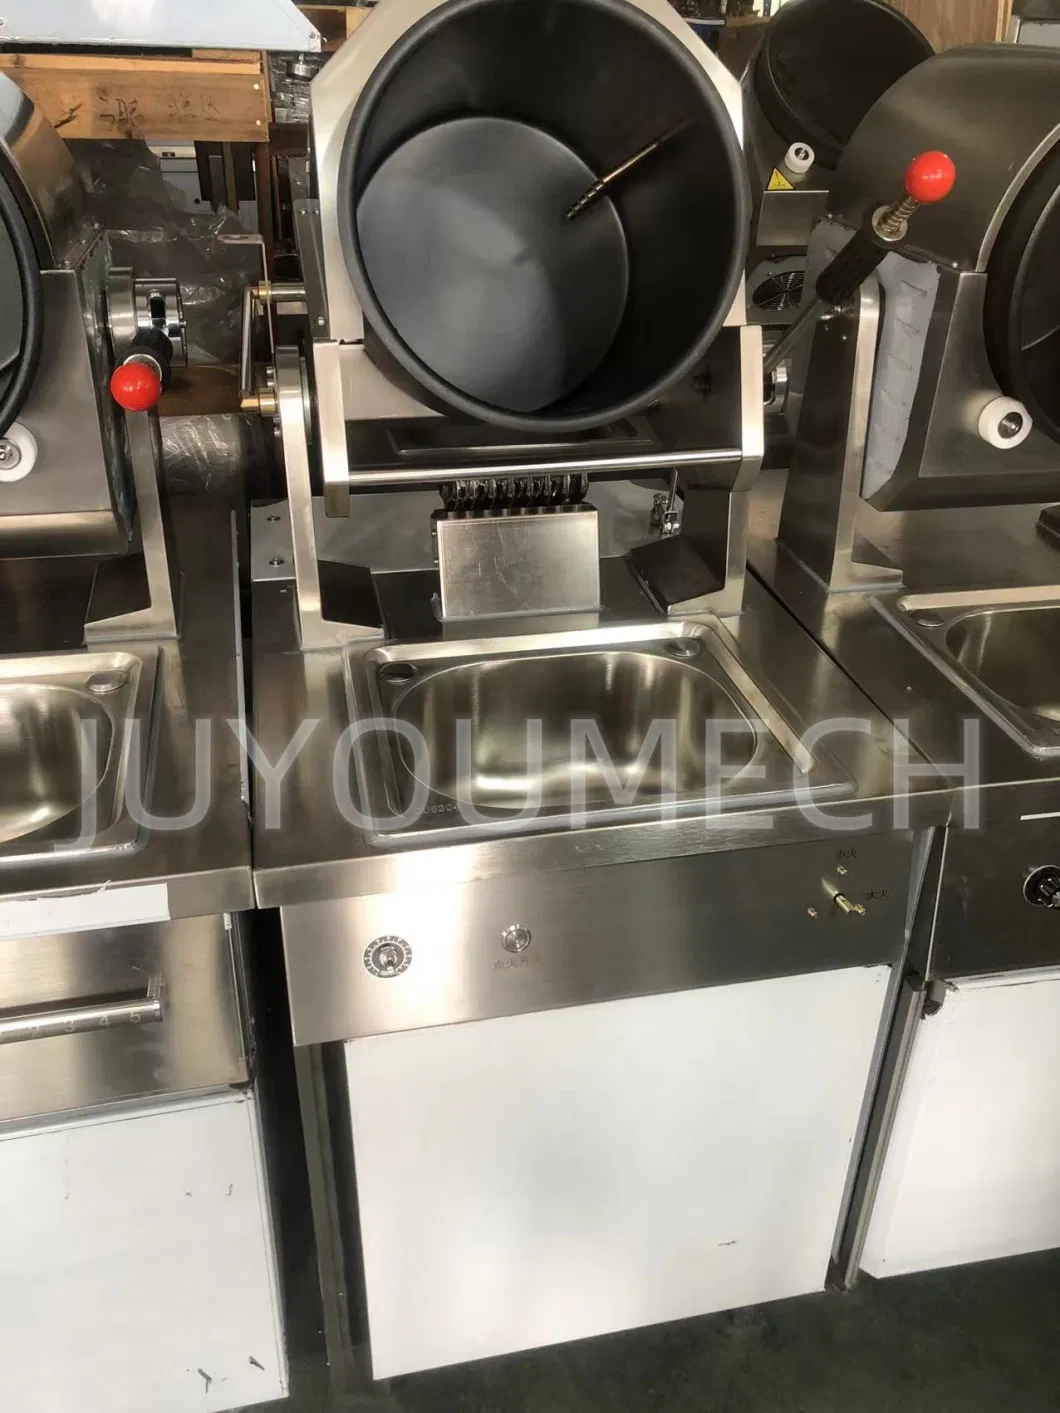 Nut Frying Machine Automatic Cooker Robot Stir Fry Pan Wok for Restaurant